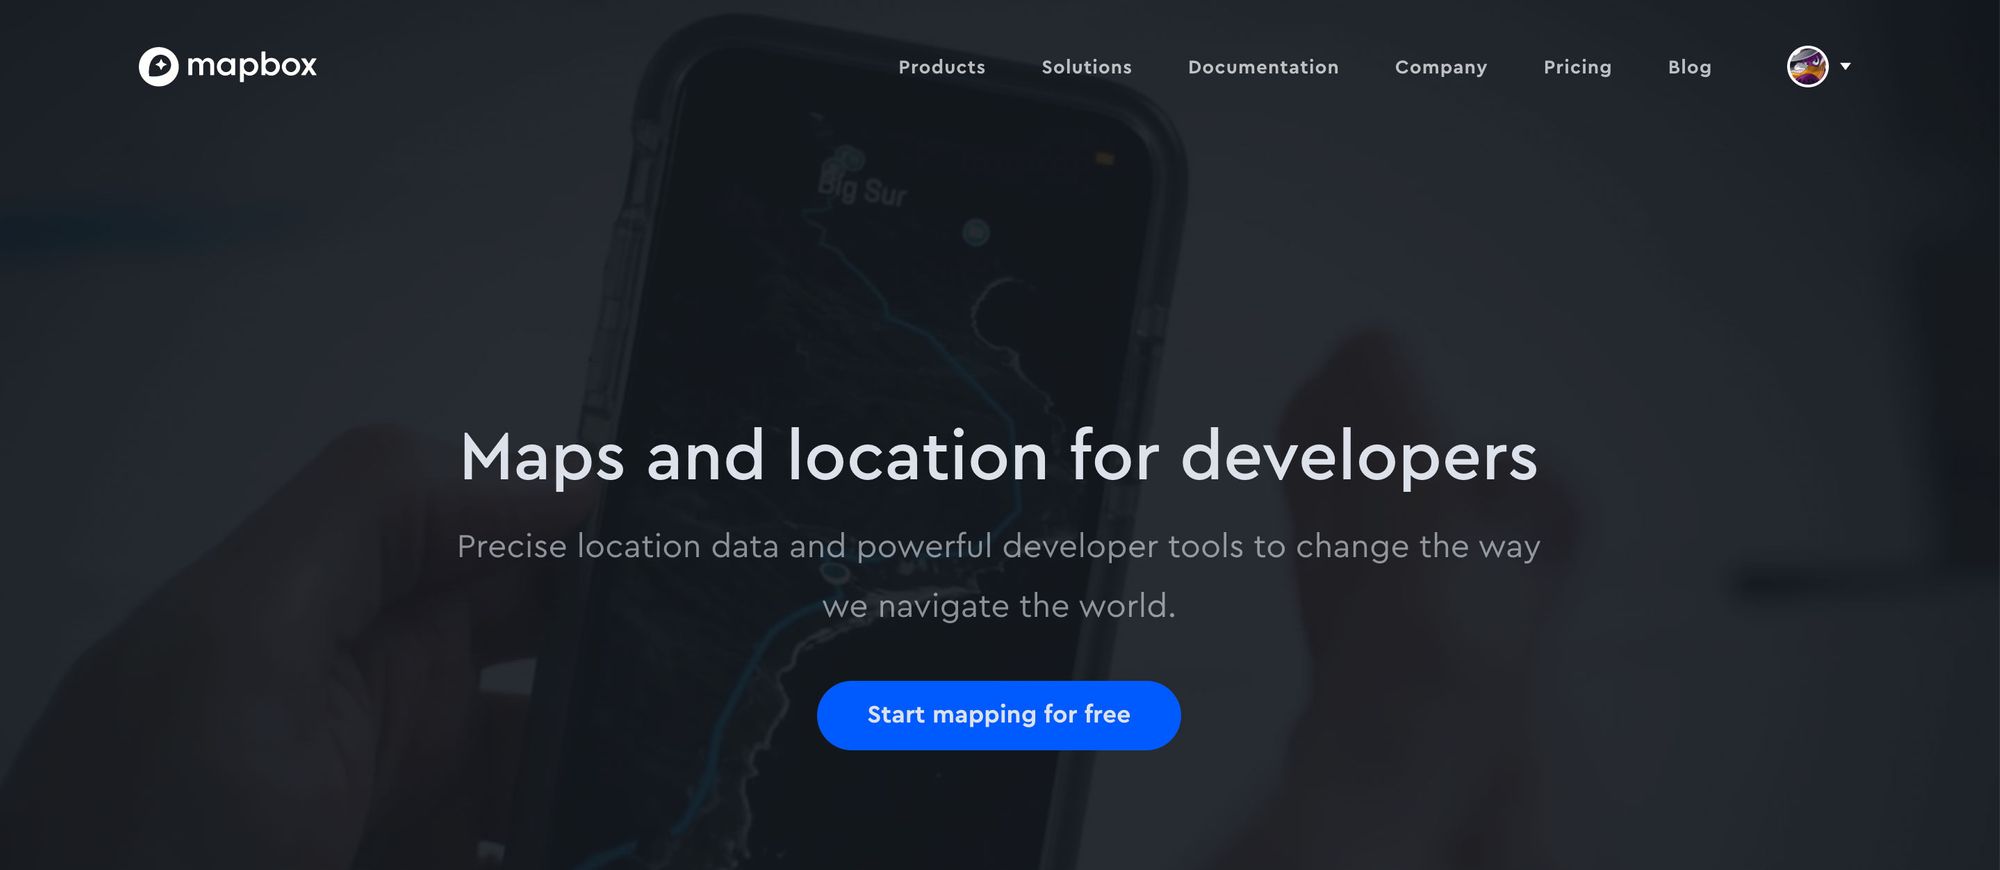 mapbox-homepage